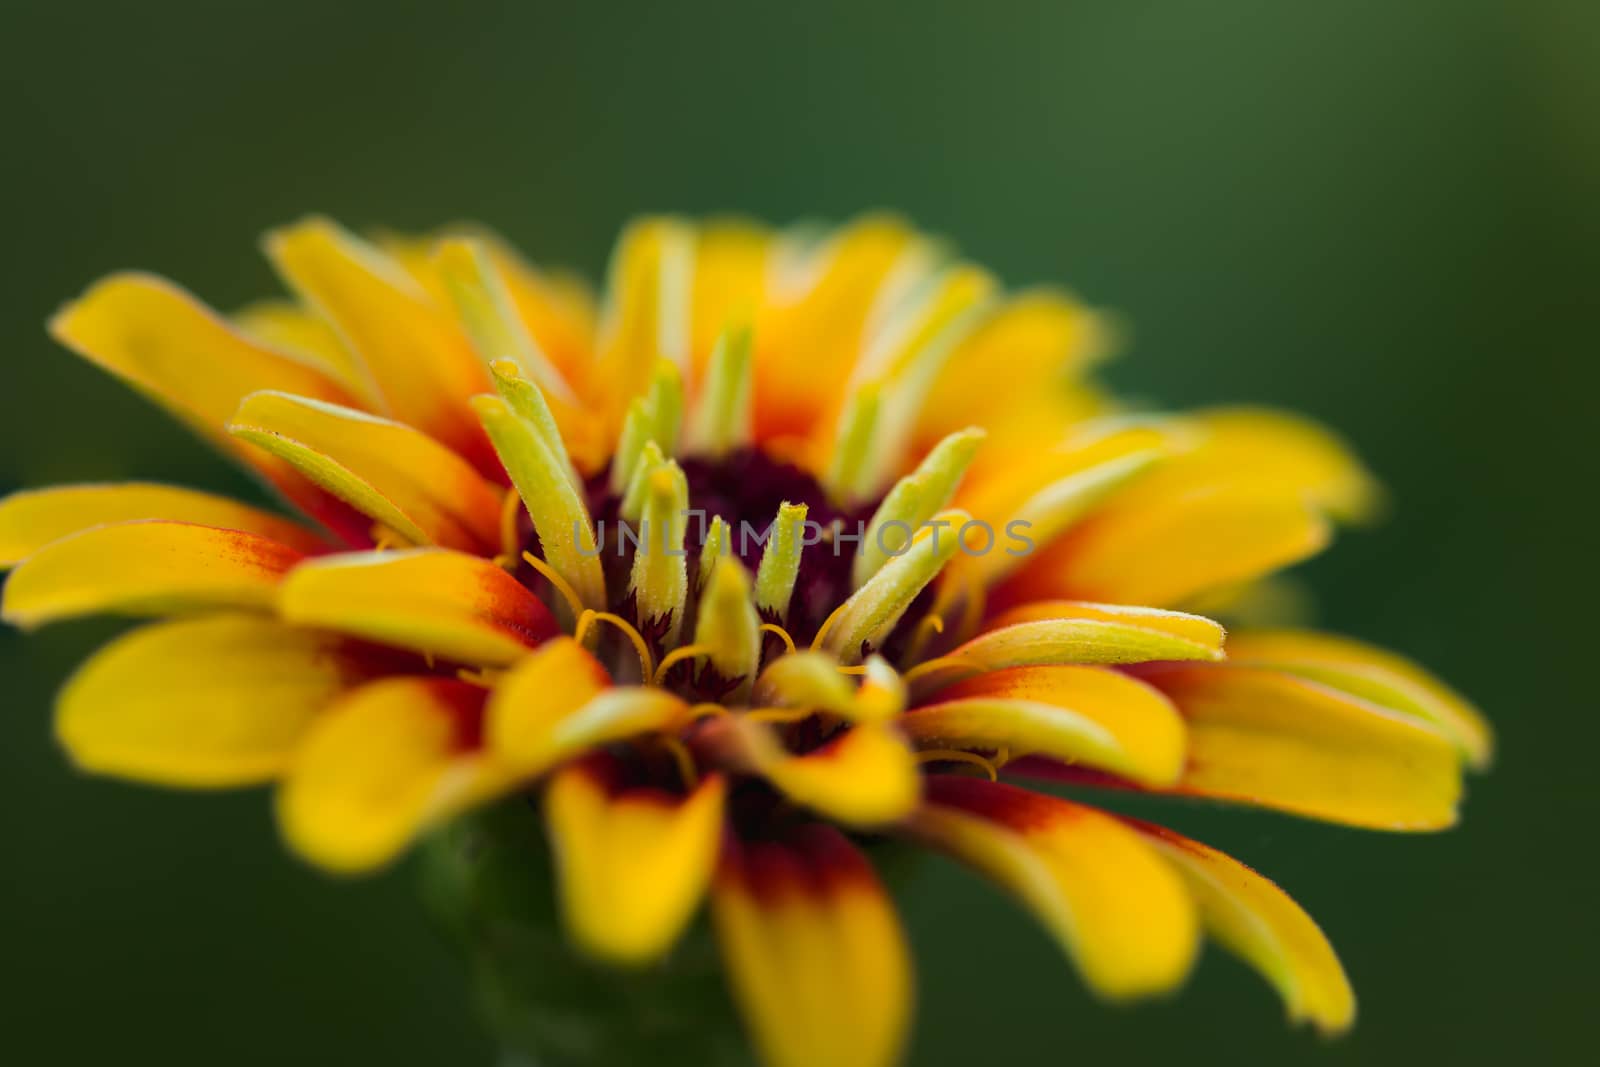 beautiful yellow flower " zinnia" closeup, macro